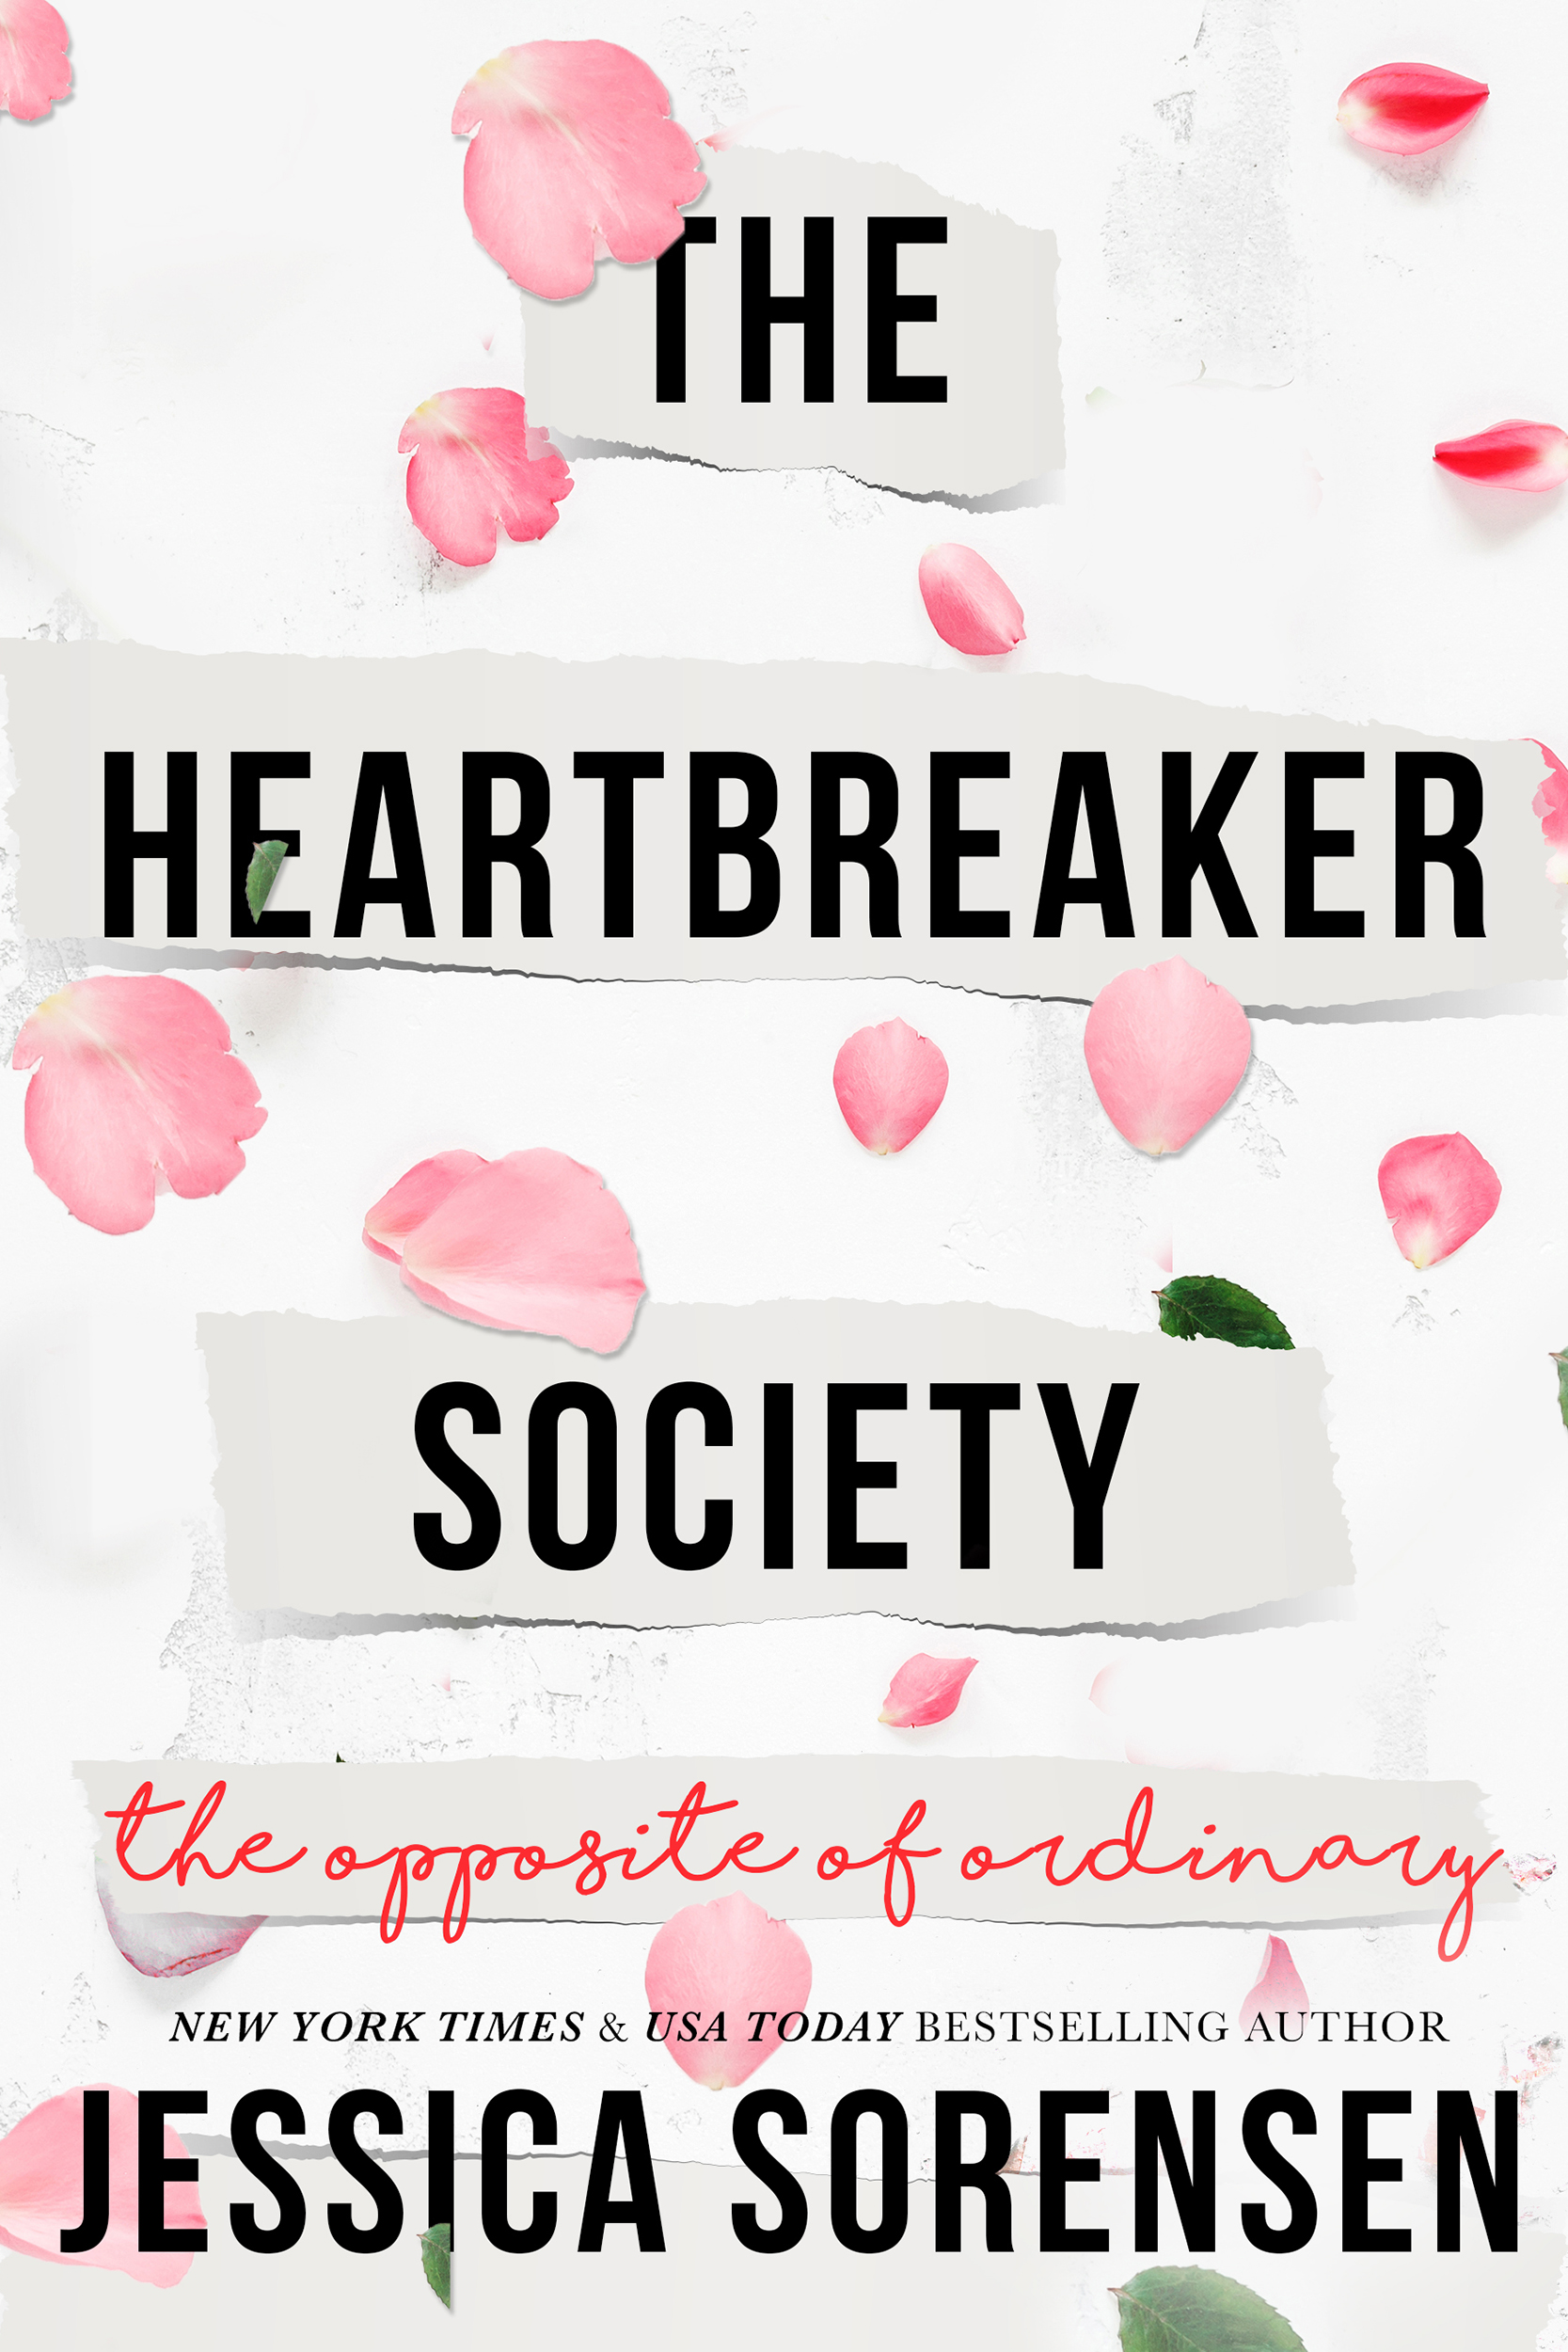 the Heartbreakers society_Opposite-ebooklg